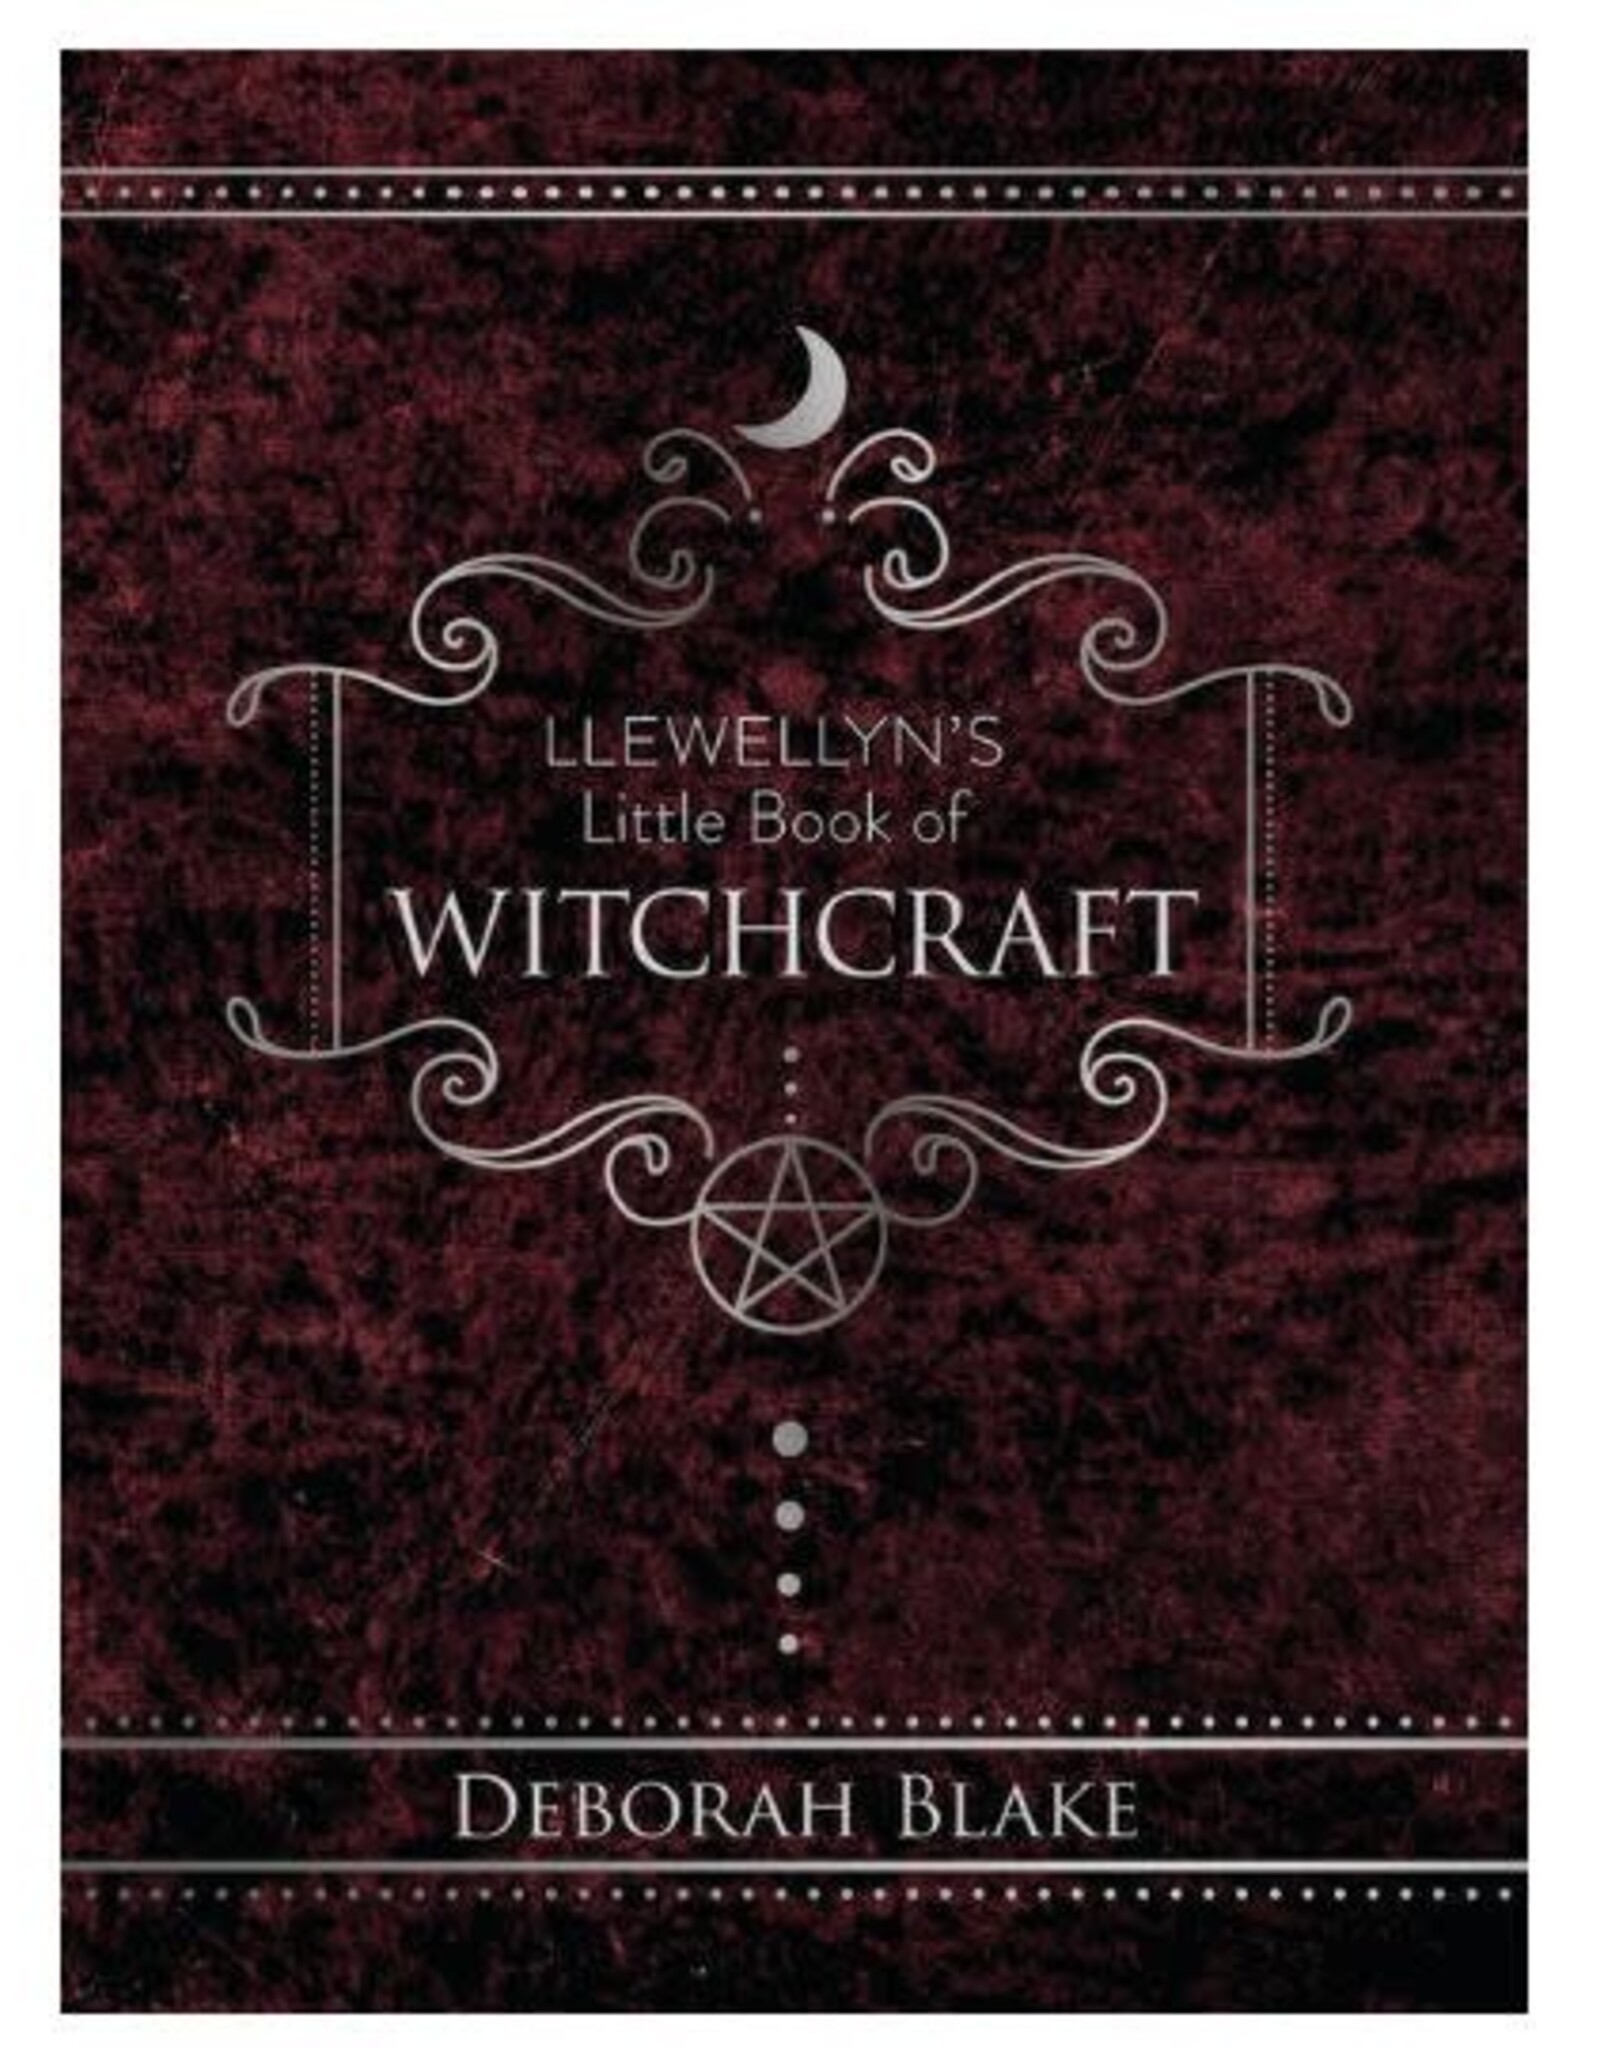 Llewellyn's Little Book of Witchcraft by Deborah Blake